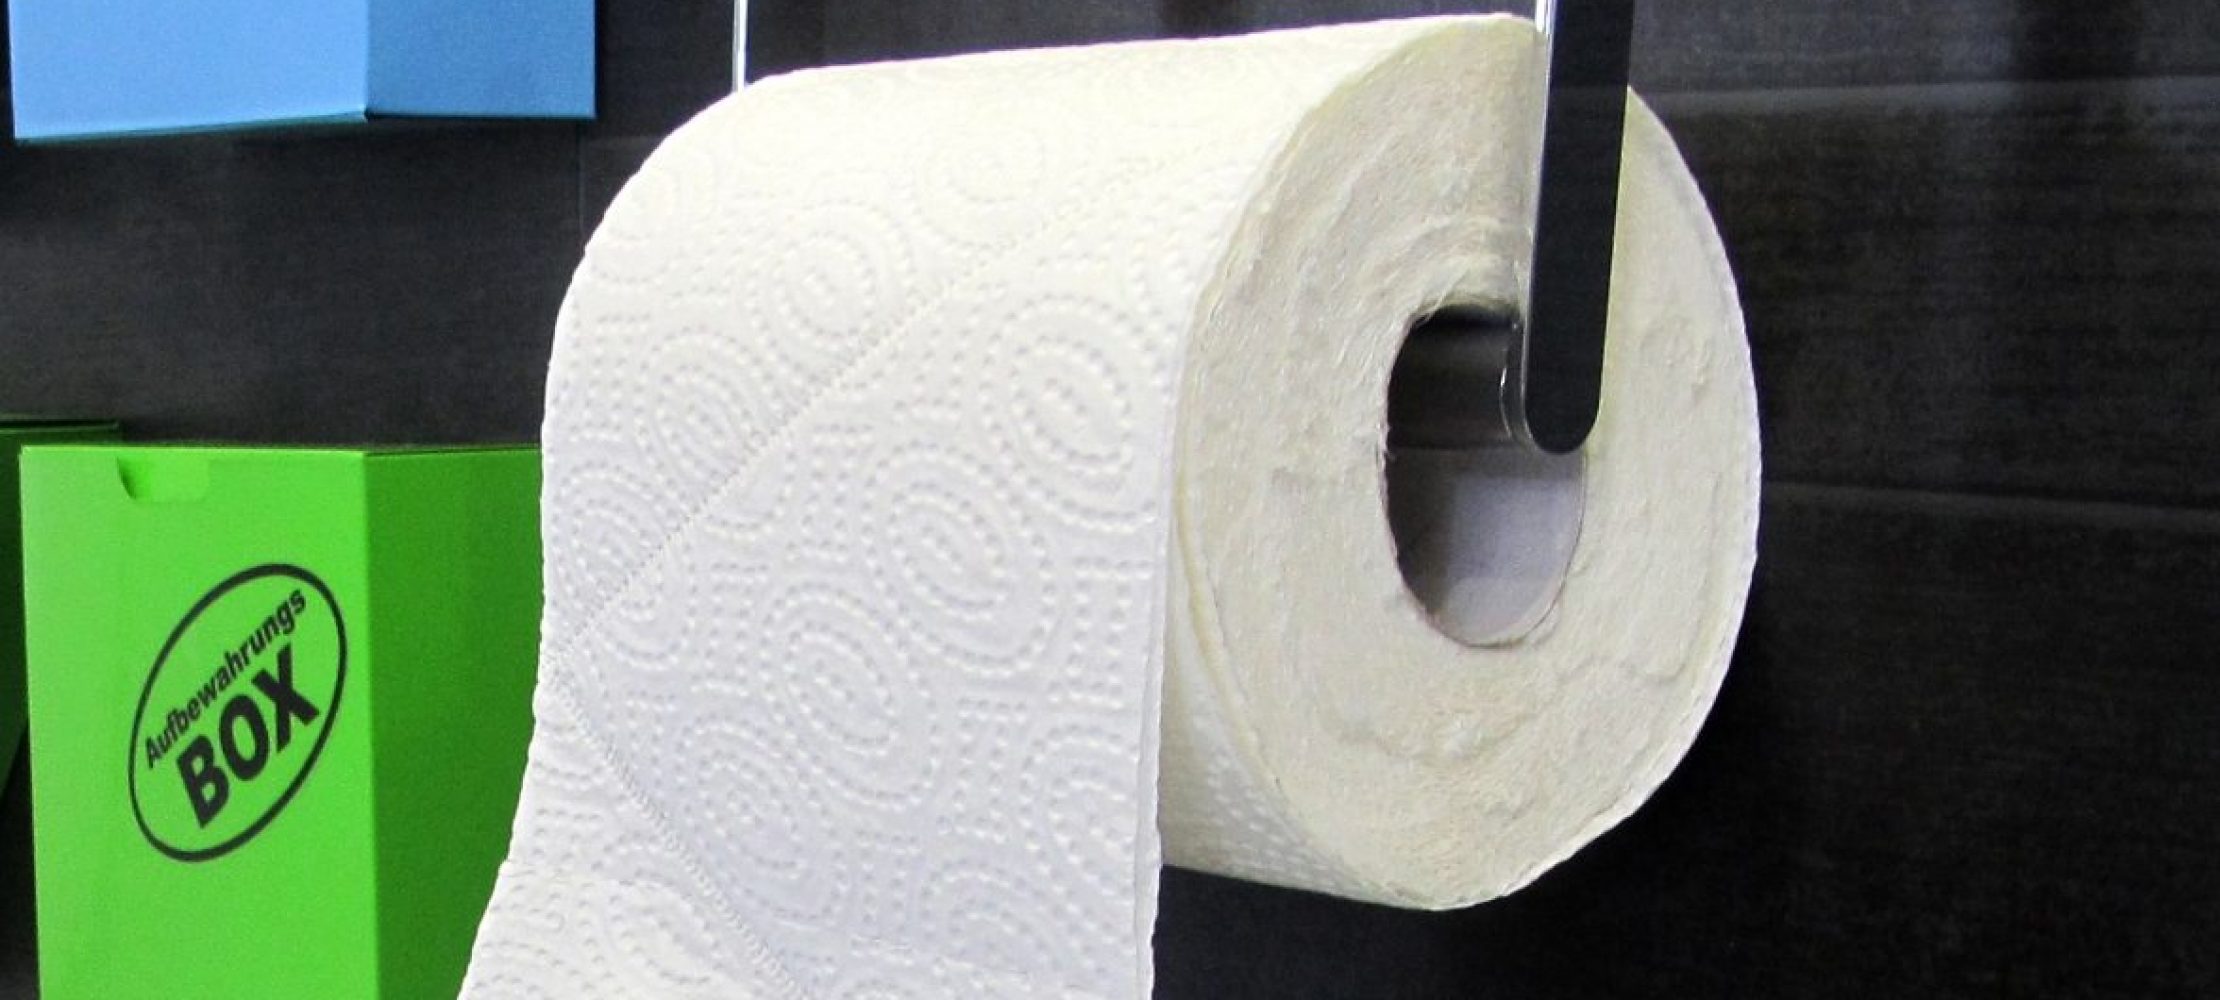 einzel verpackt 10 Rollen Toilettenpapier  Klopapier Wurfmaterial wie Kamelle 